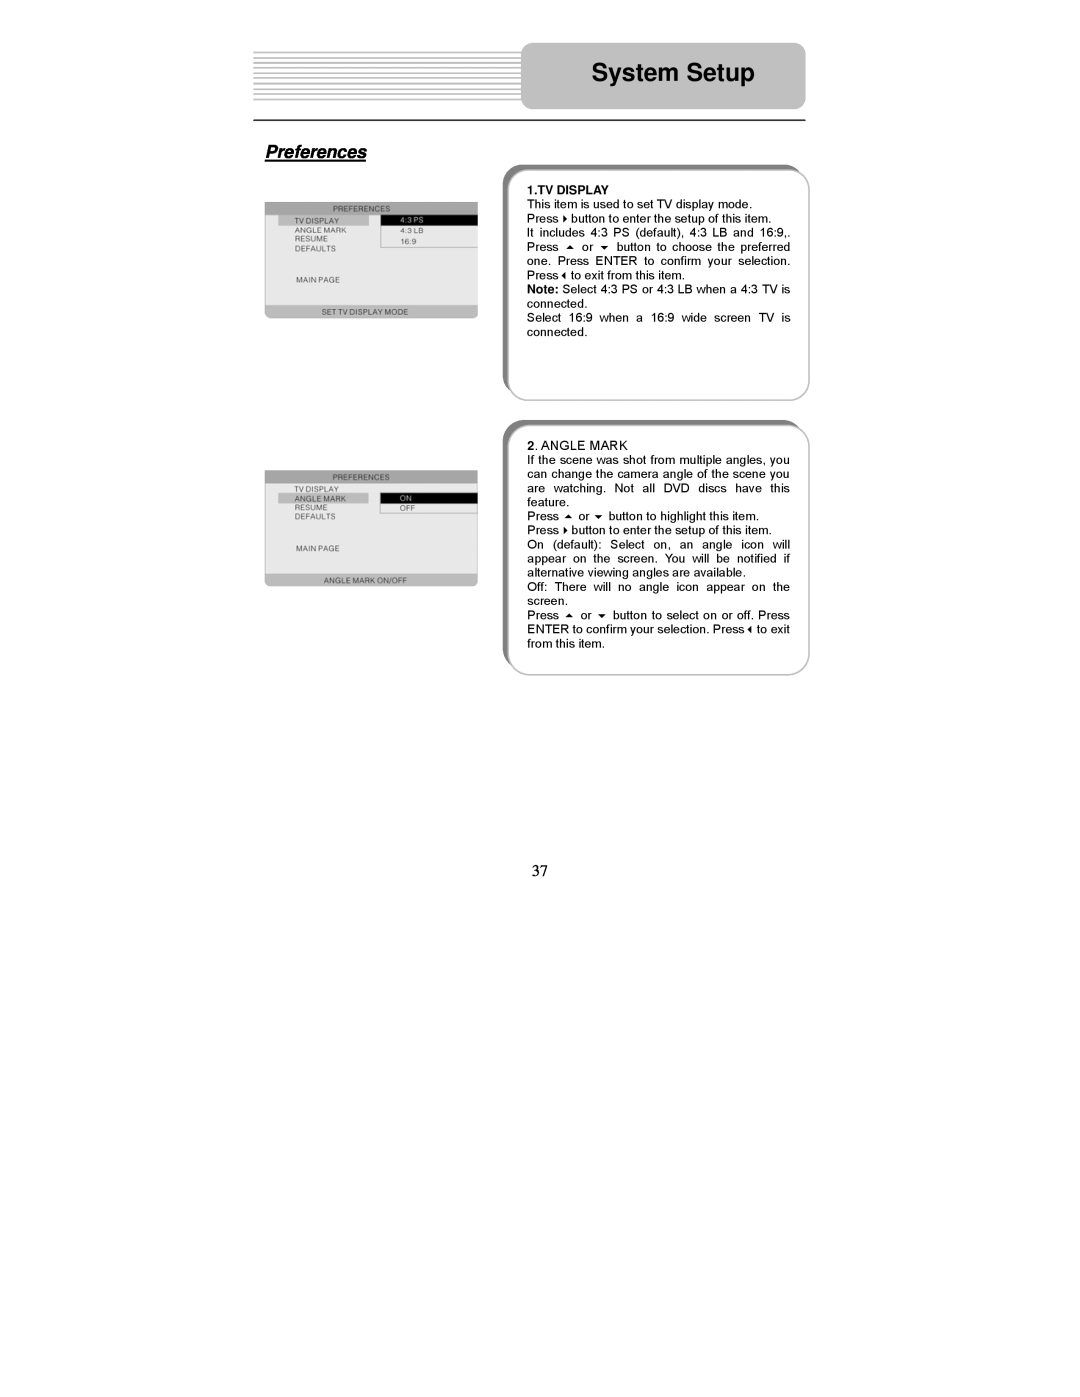 Polaroid PDM-0725 operation manual Preferences, System Setup, Angle Mark 